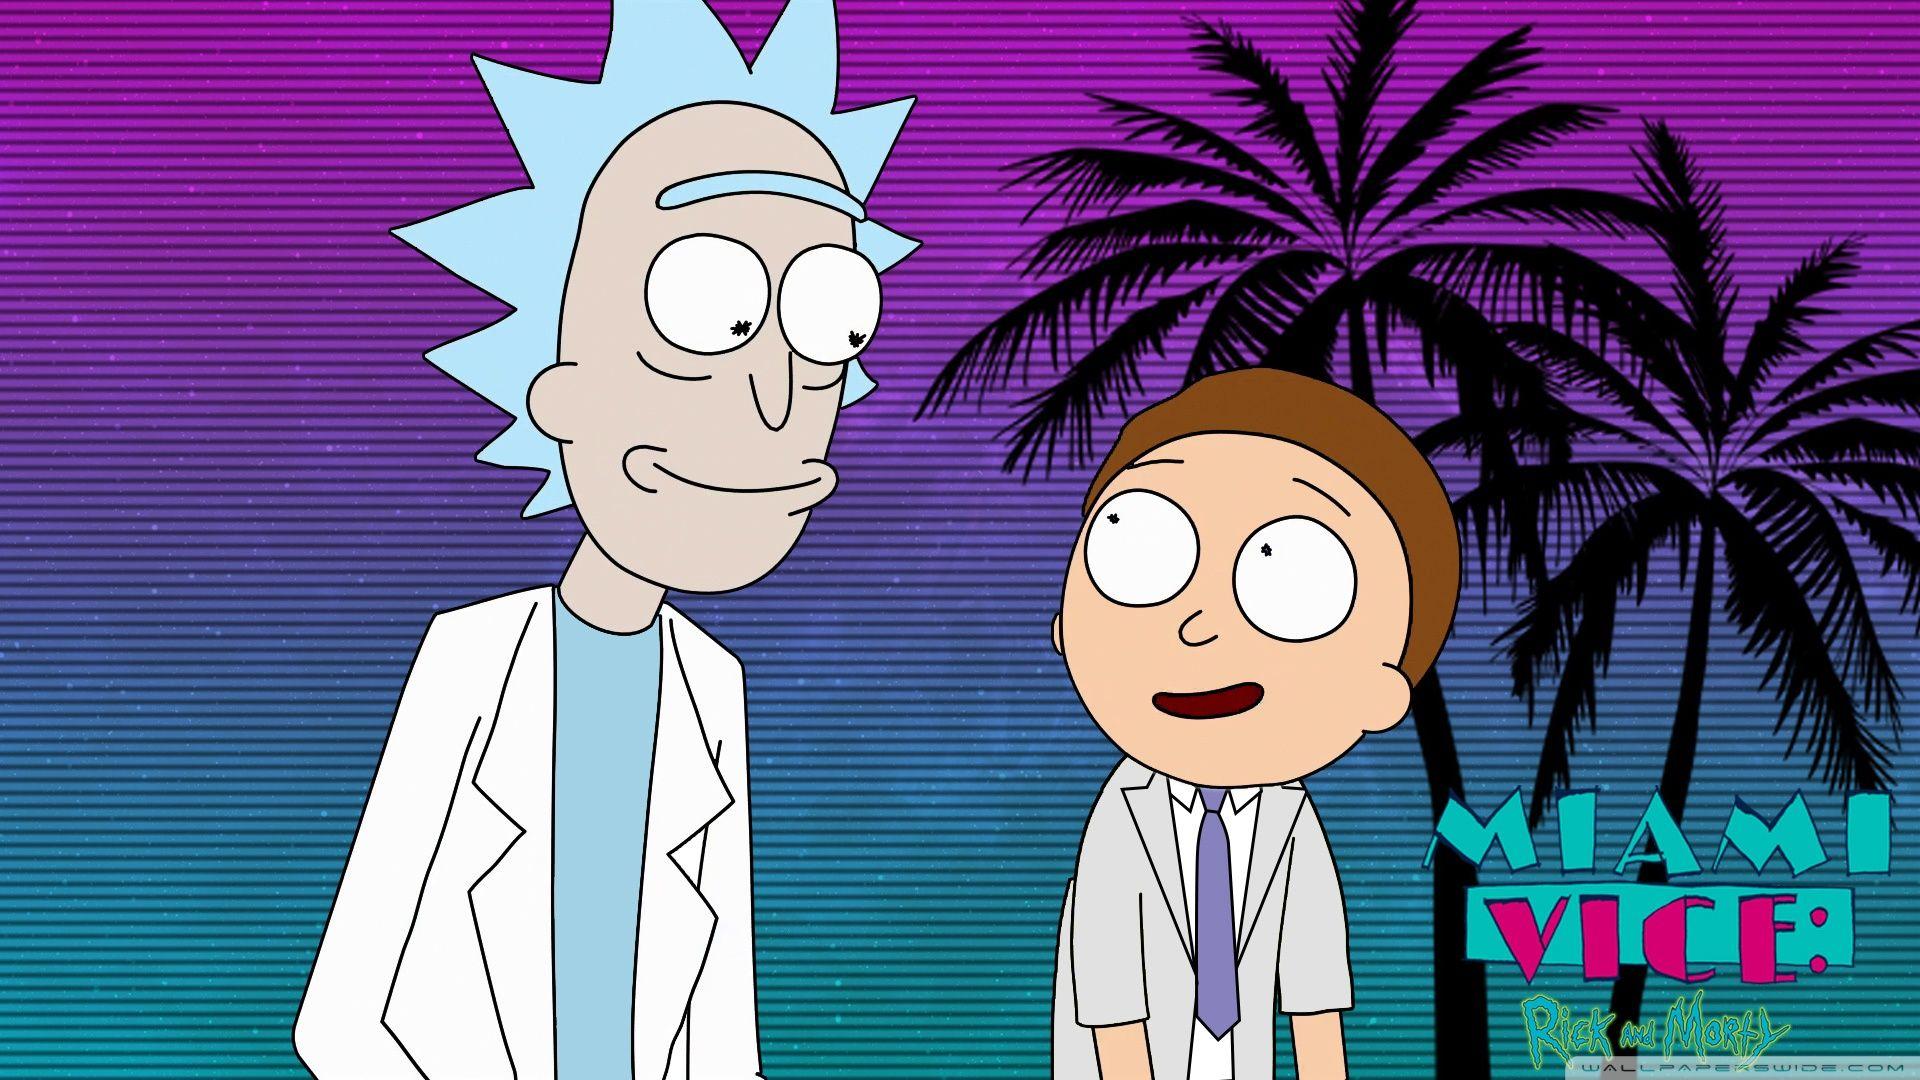  Rick  And Morty  Season 4 Wallpapers  Wallpaper  Cave